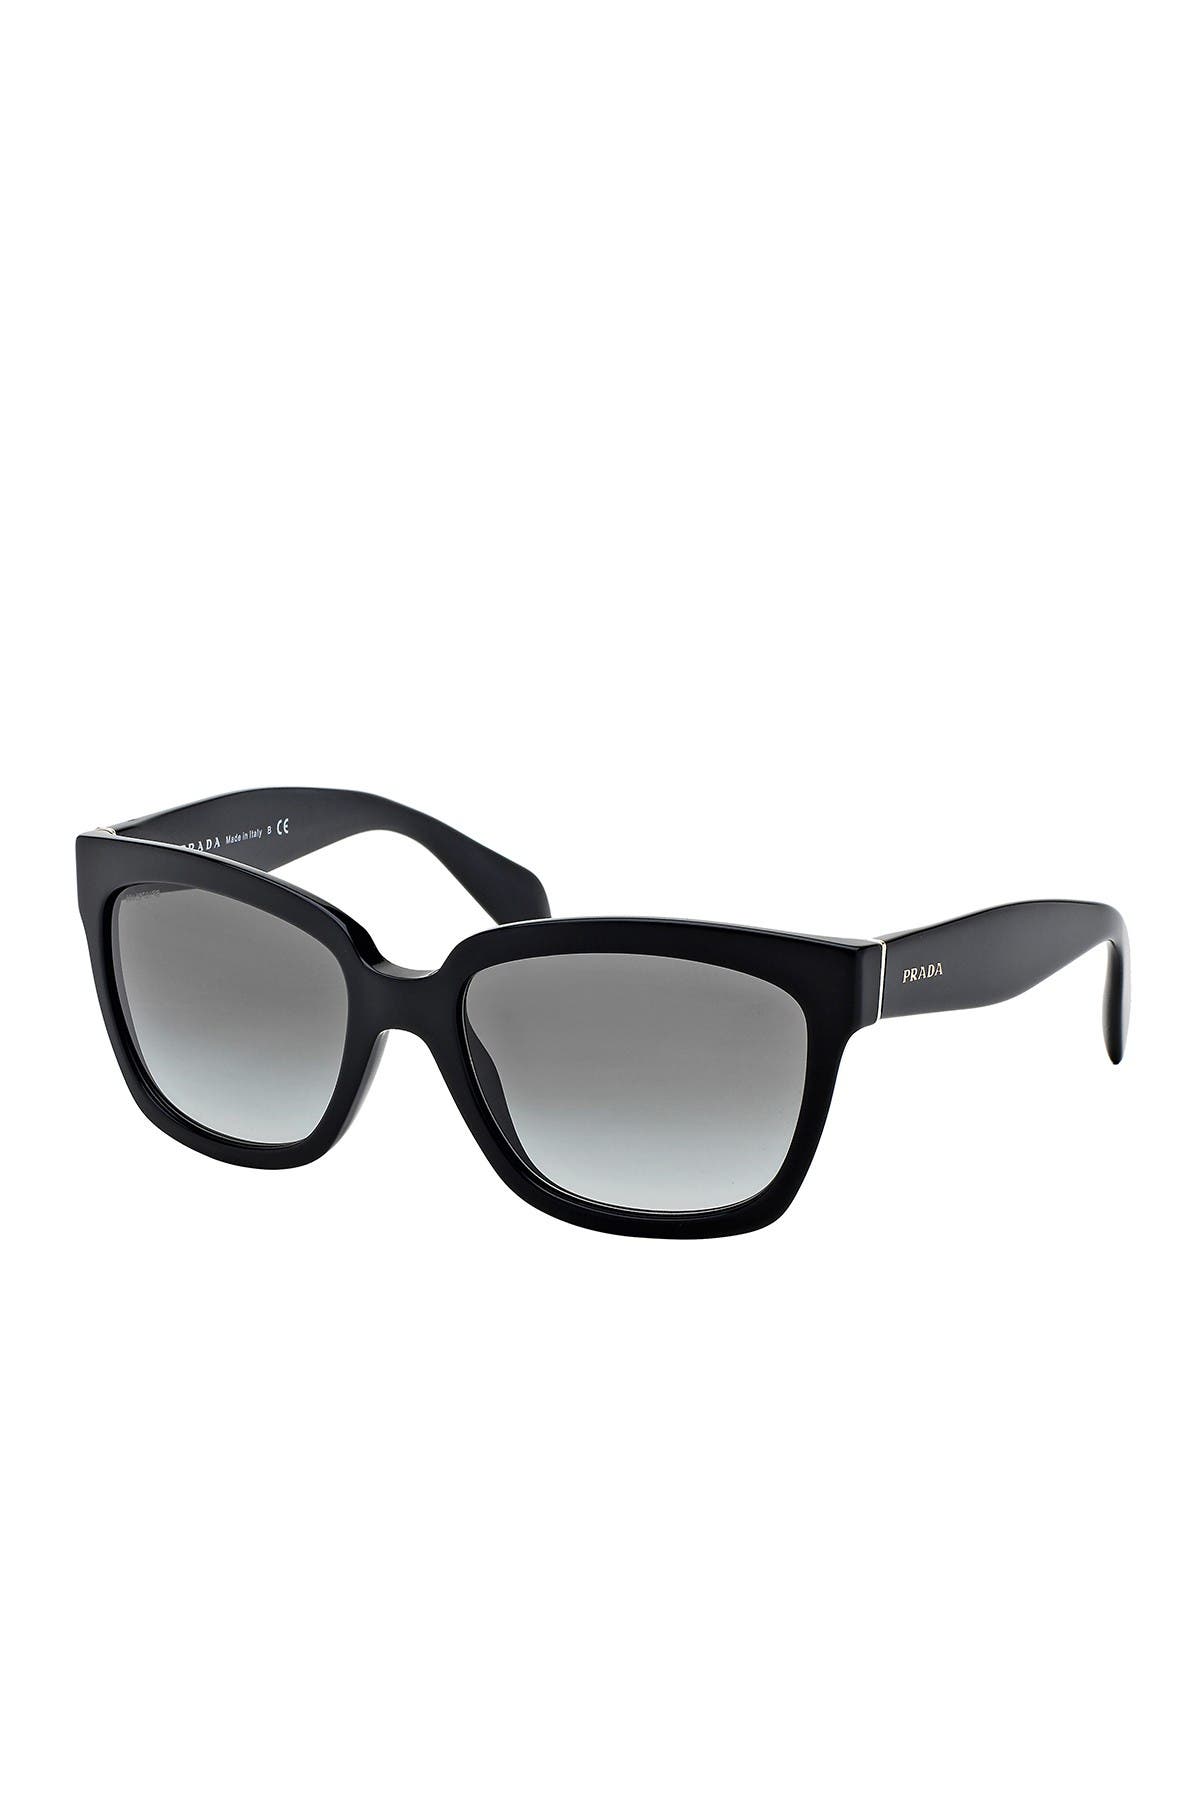 prada heritage 56mm sunglasses